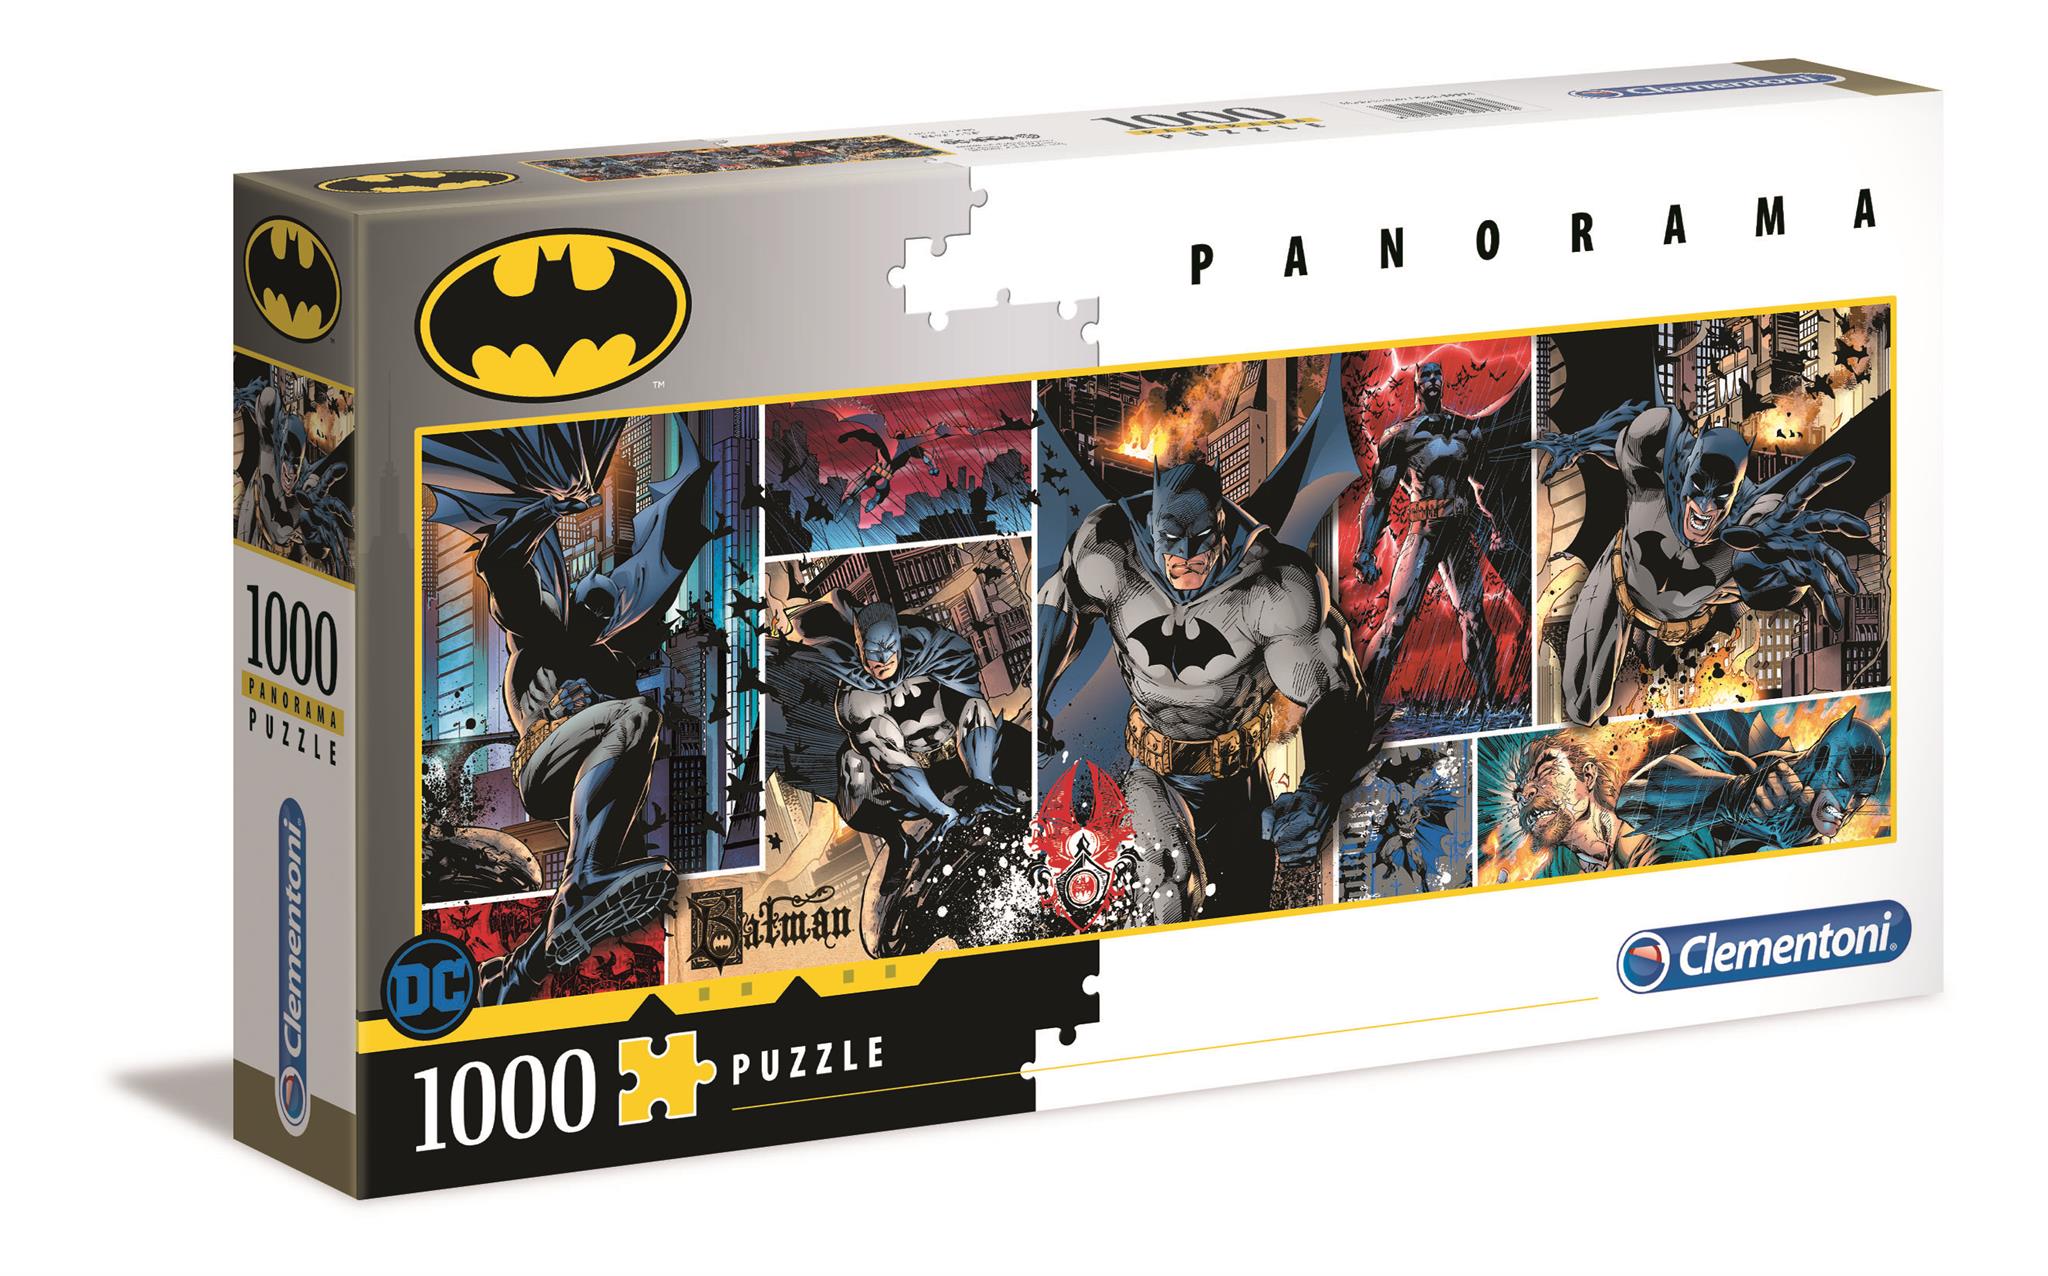 Clementoni - Panorama Puzzle 1000 pcs - Batman 2020 (39574) - Leker